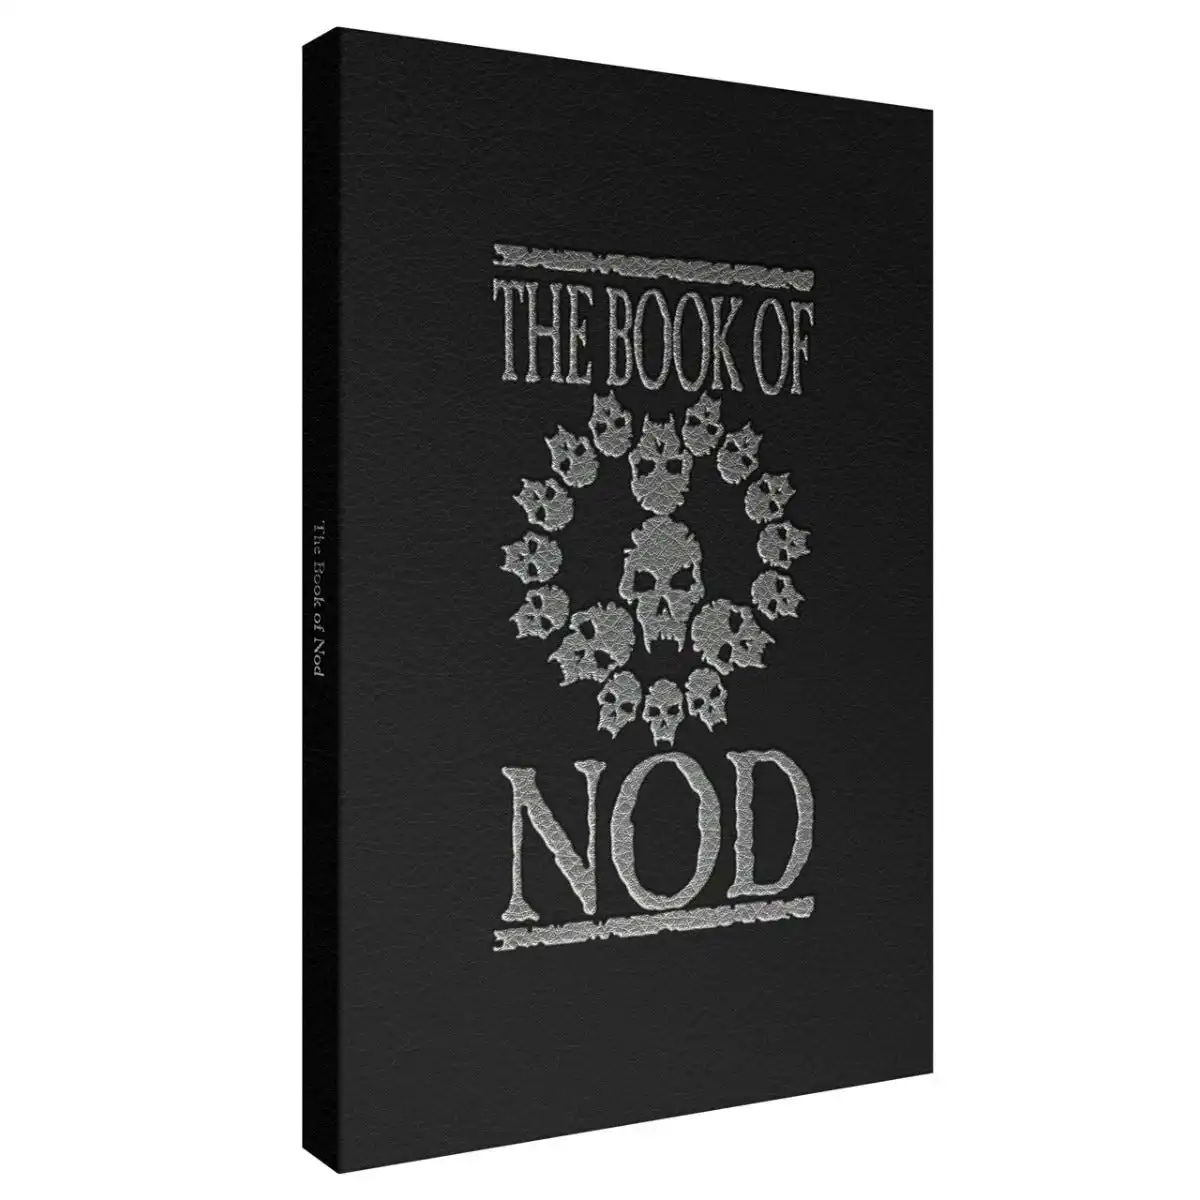 Vampire: The Masquerade 5th Edition - The Book of Nod